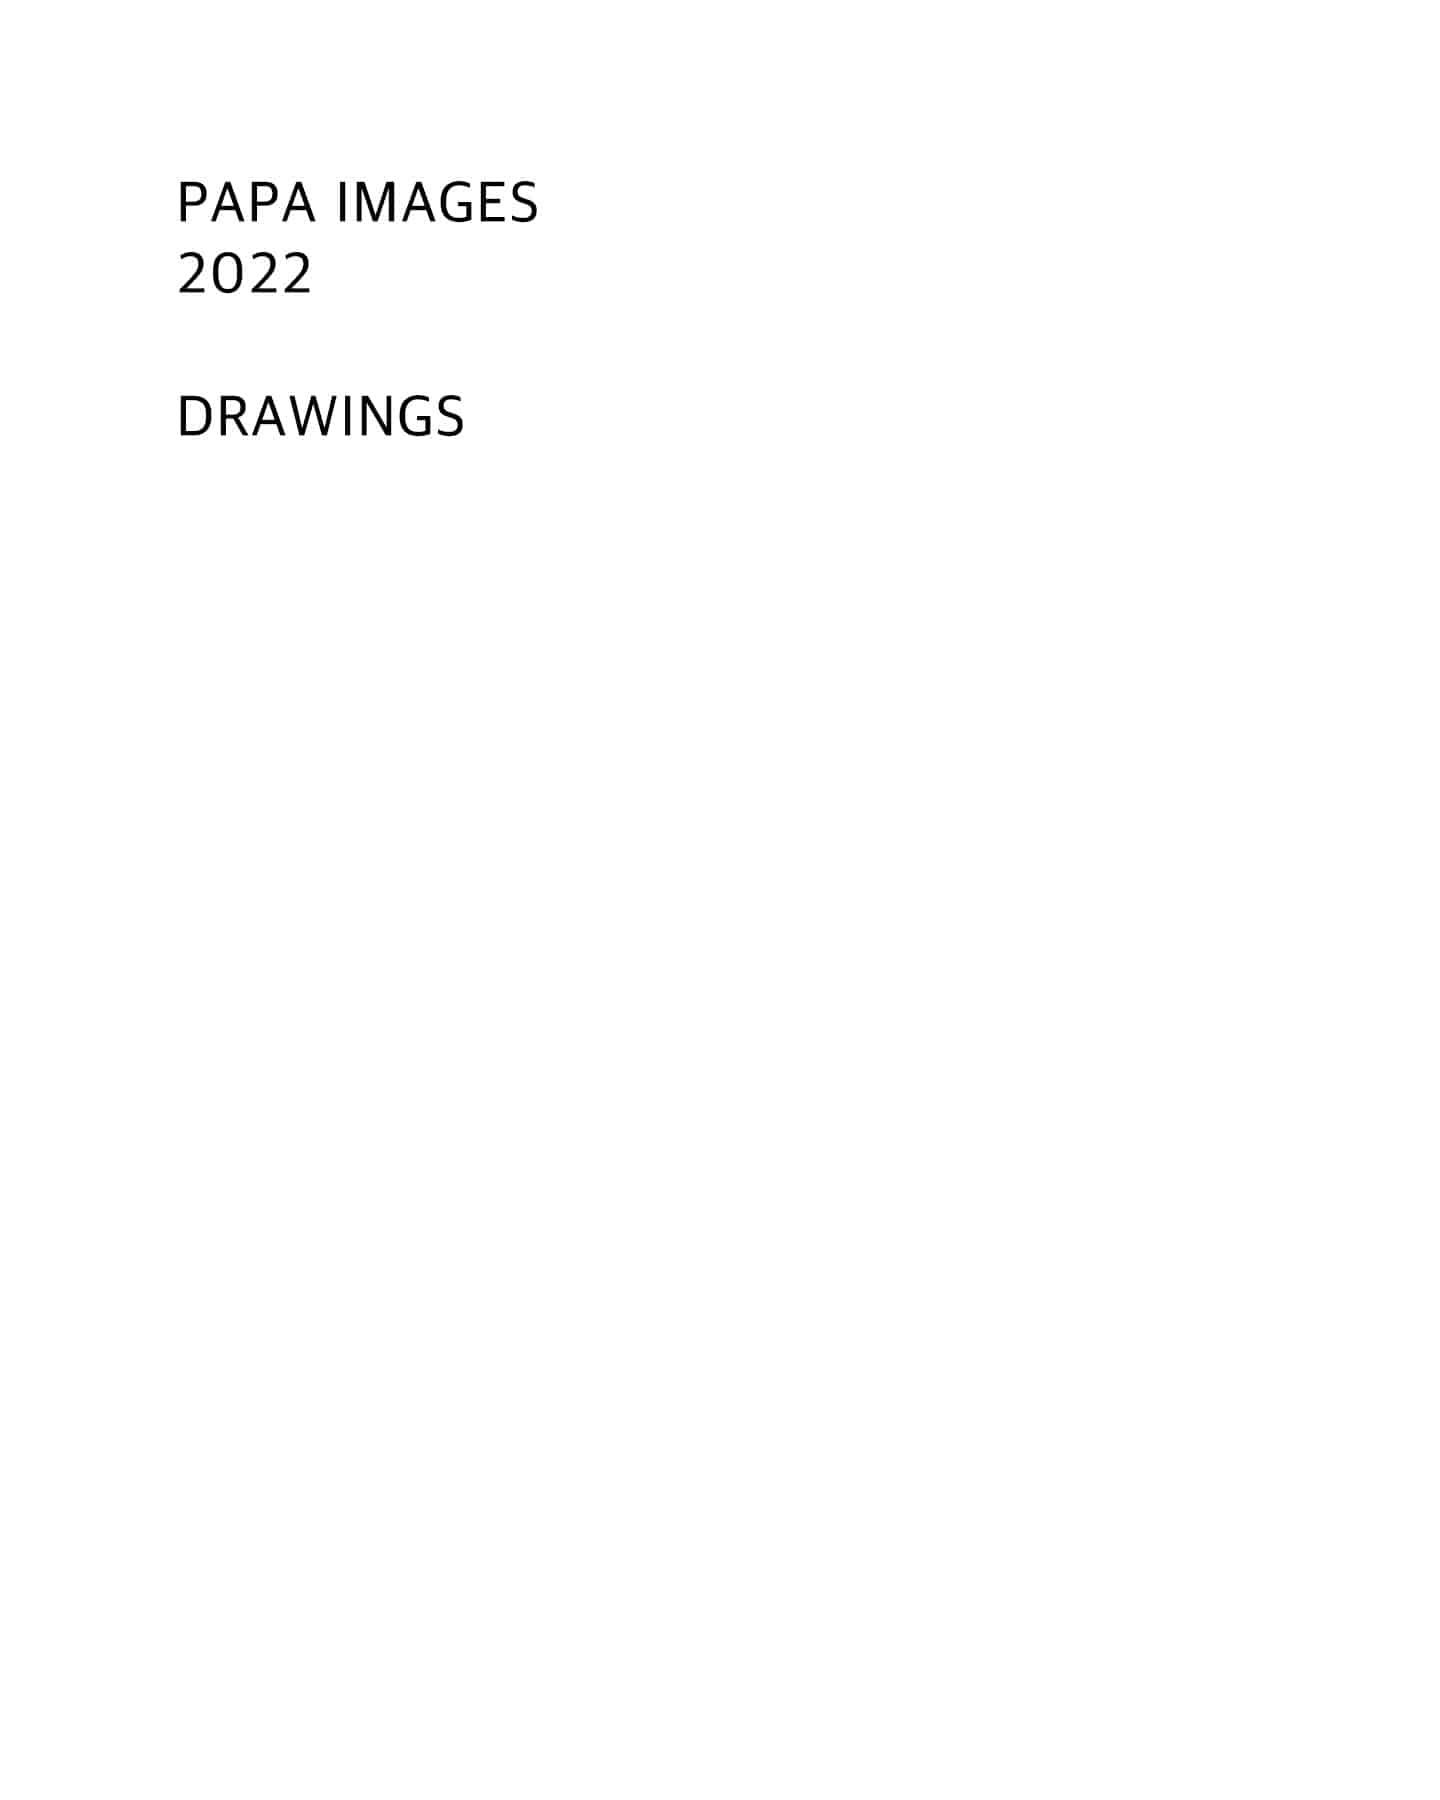 PAPA IMAGES 2022, drawings